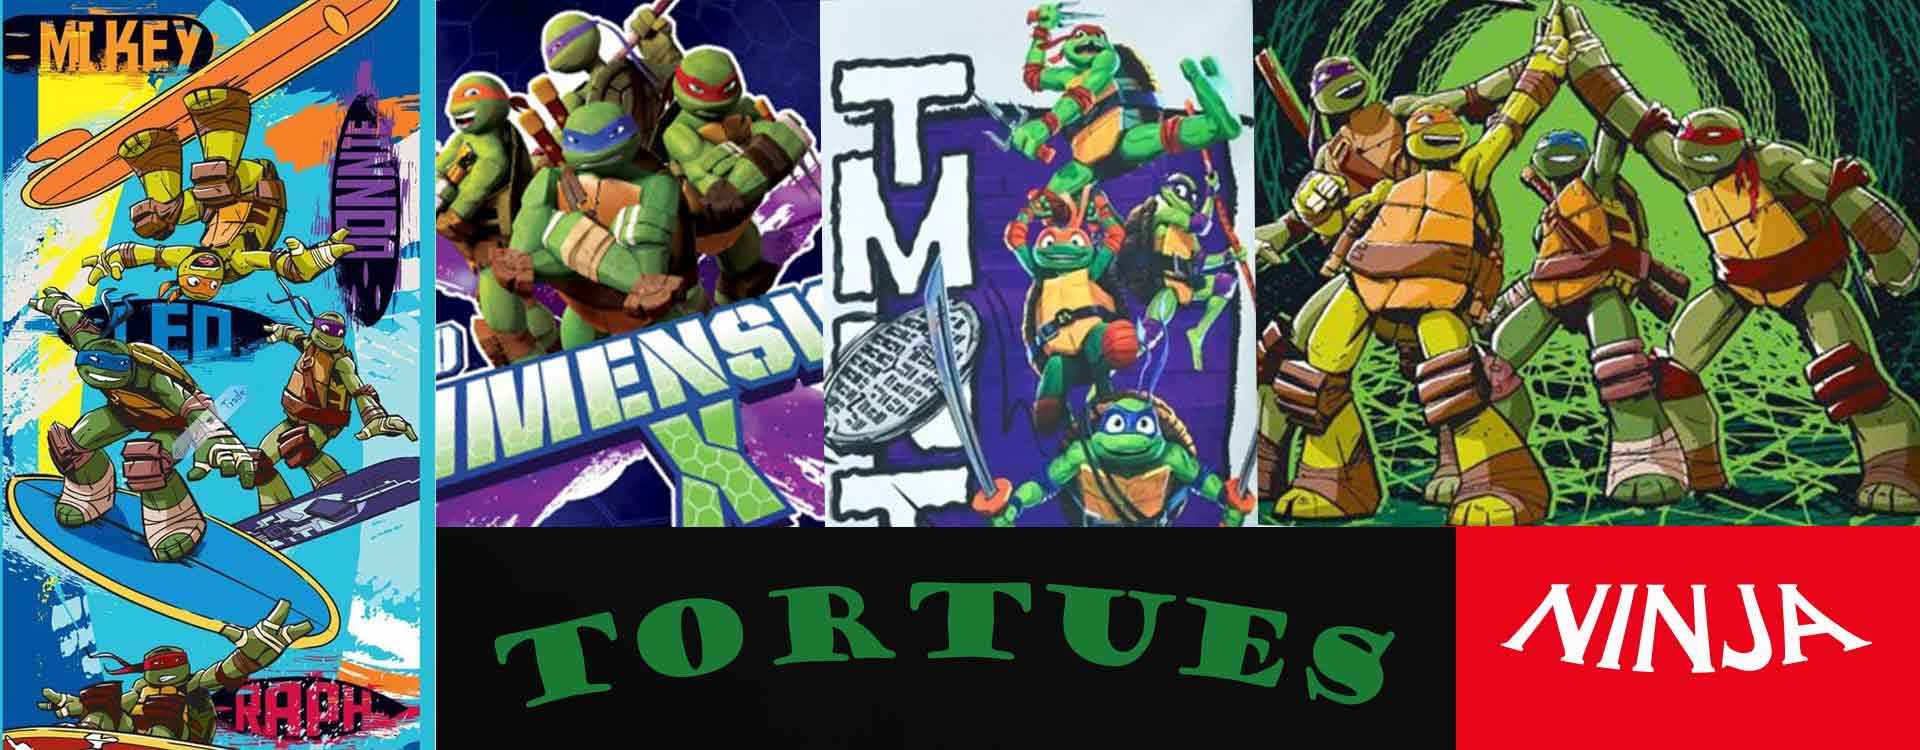 Personalized Splinter Teenage Mutant Ninja Turtles Awesome Father